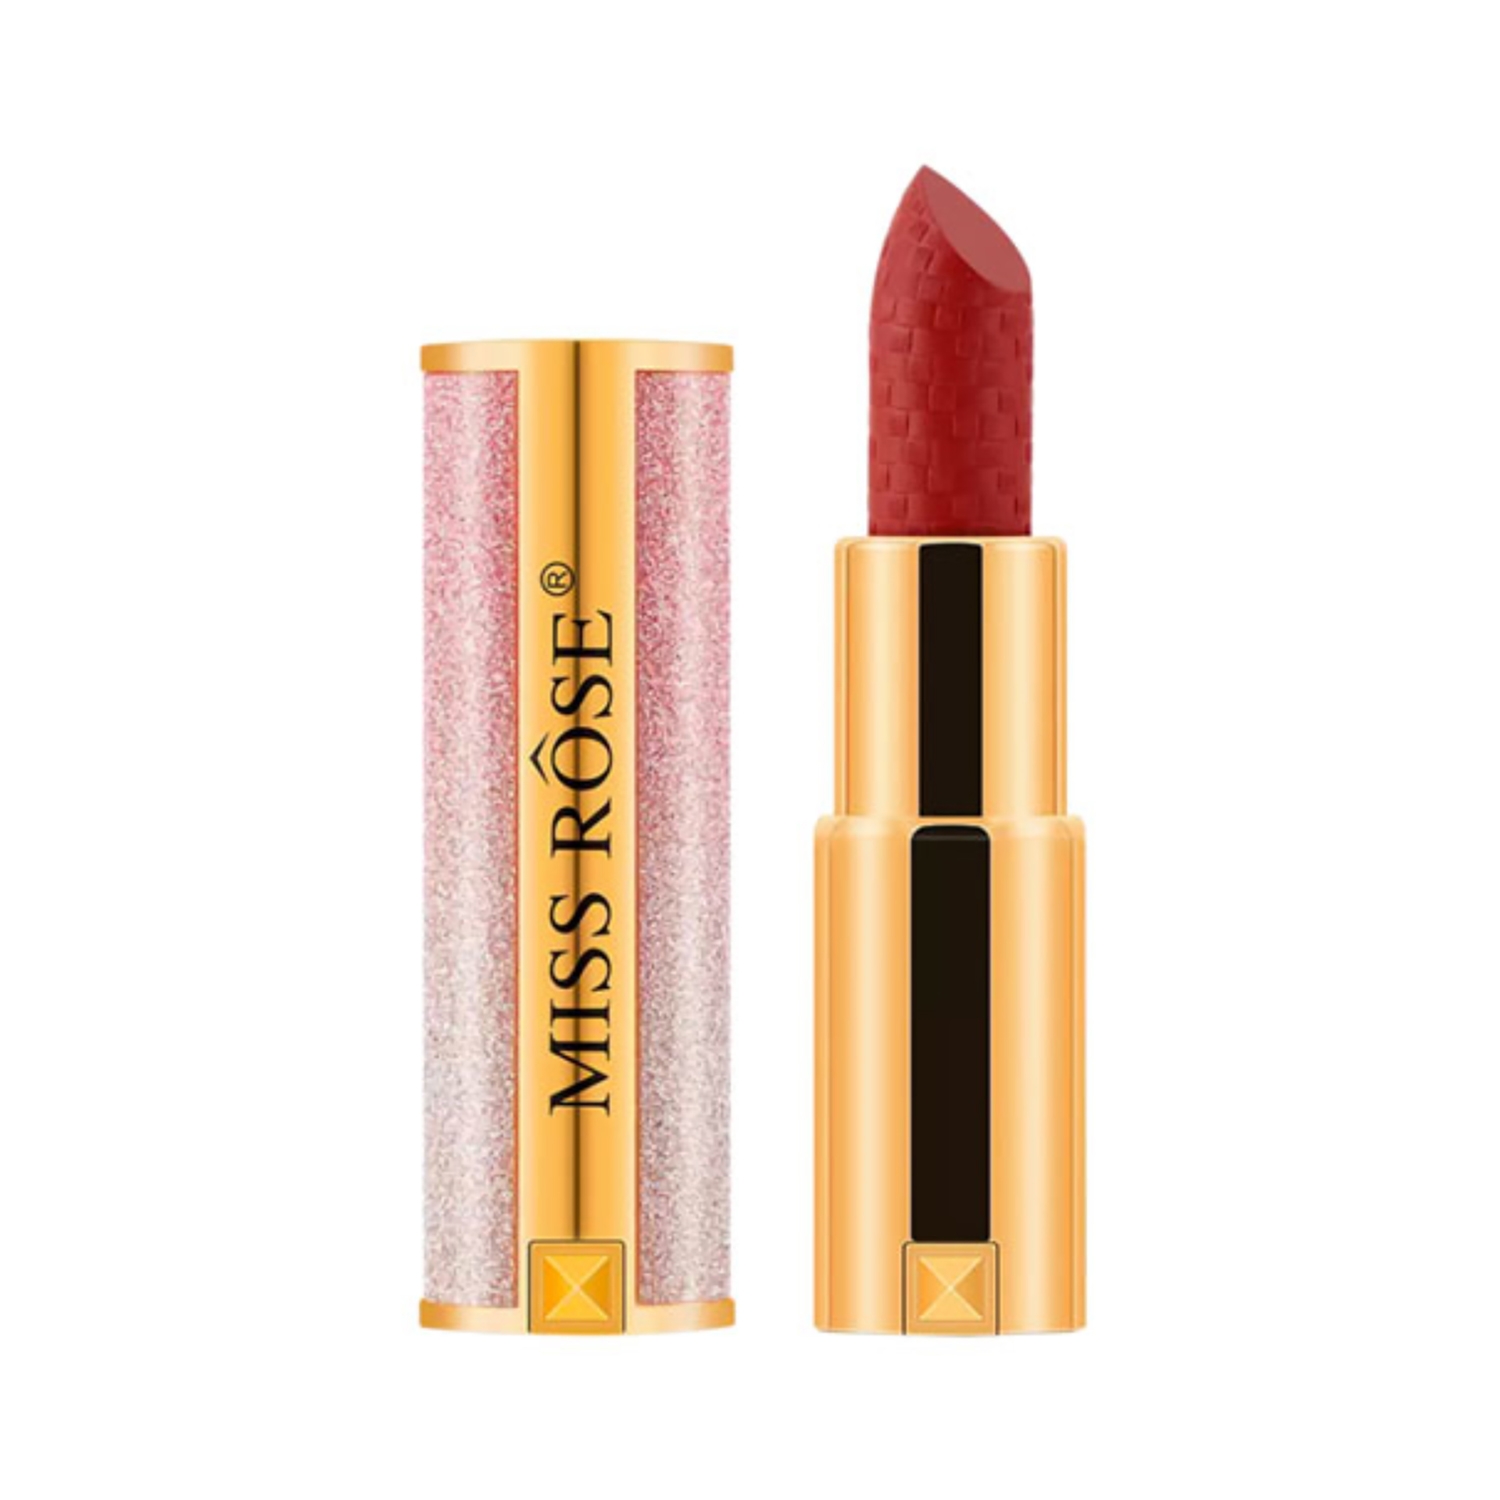 Miss Rose Professional Smudge Proof Creamy Matte Lipstick - S4 (3g)